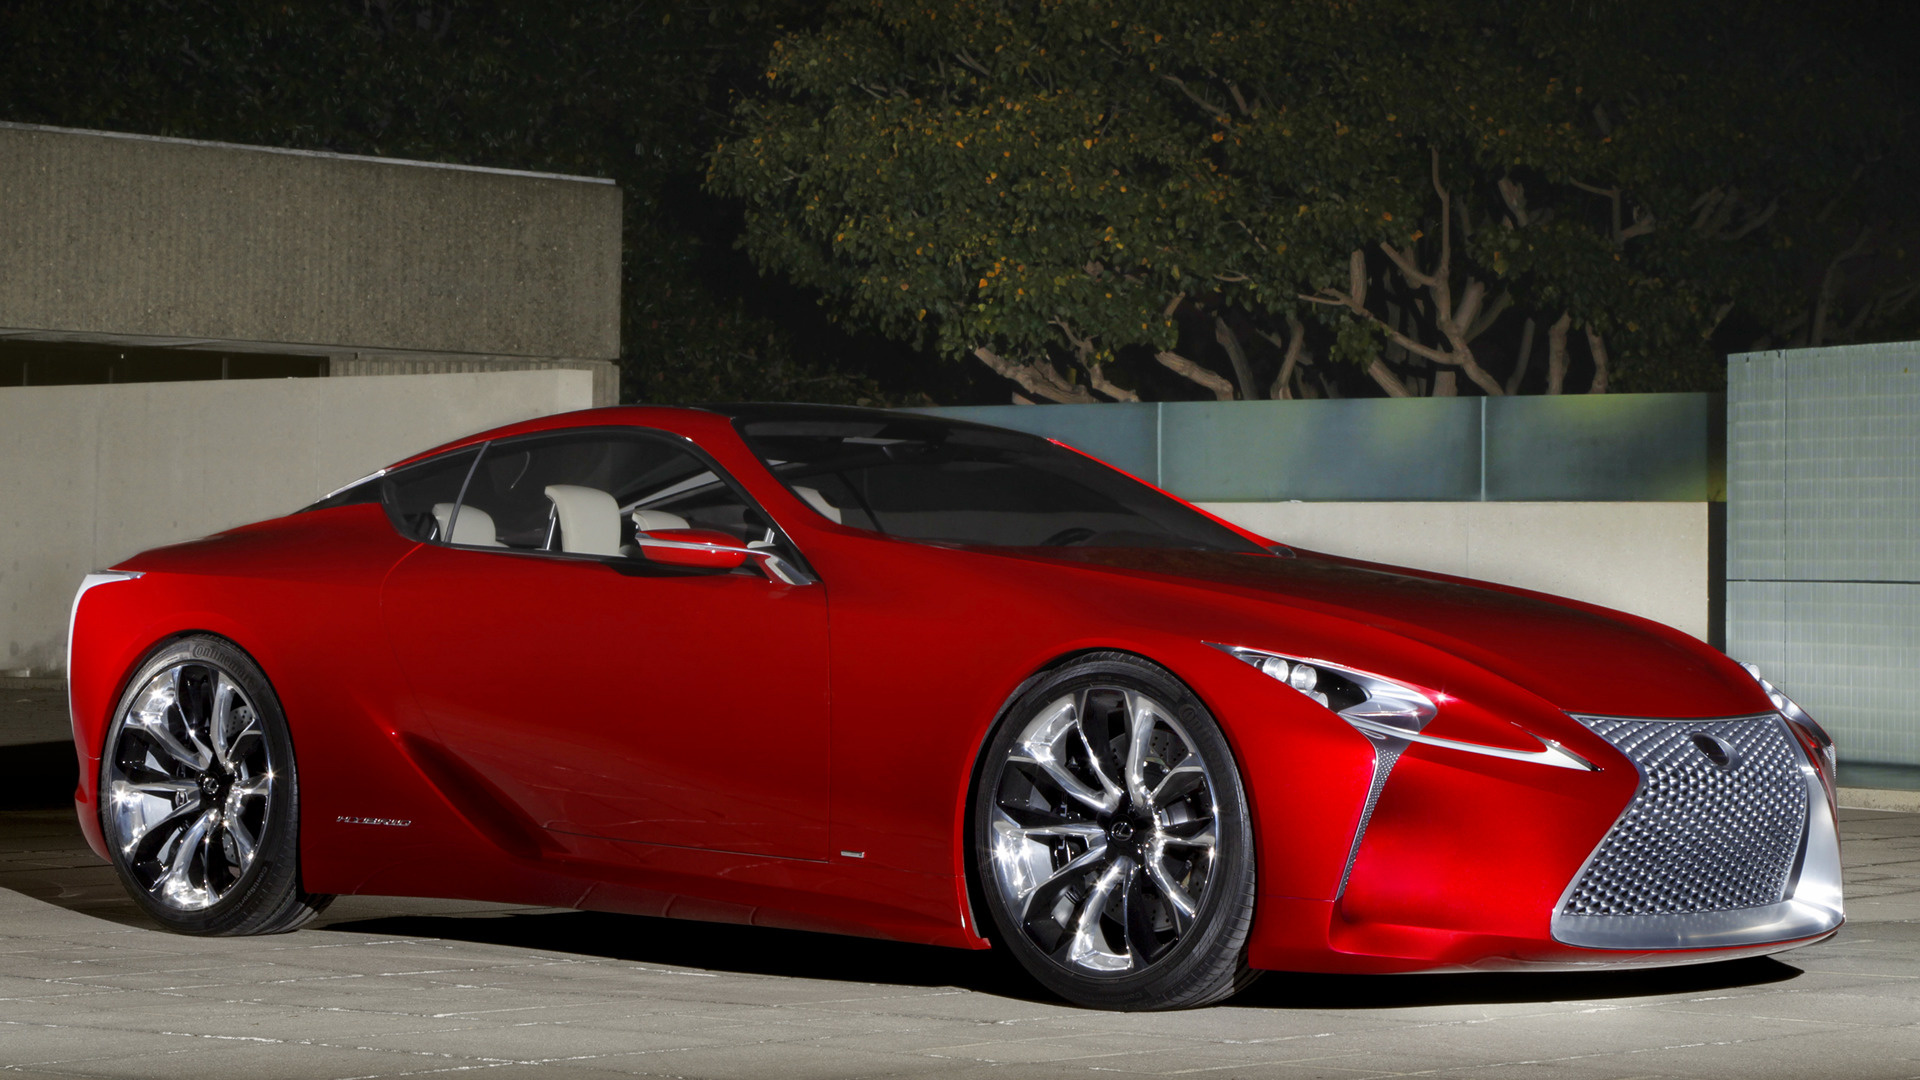 2012 Lexus LF LC Concept